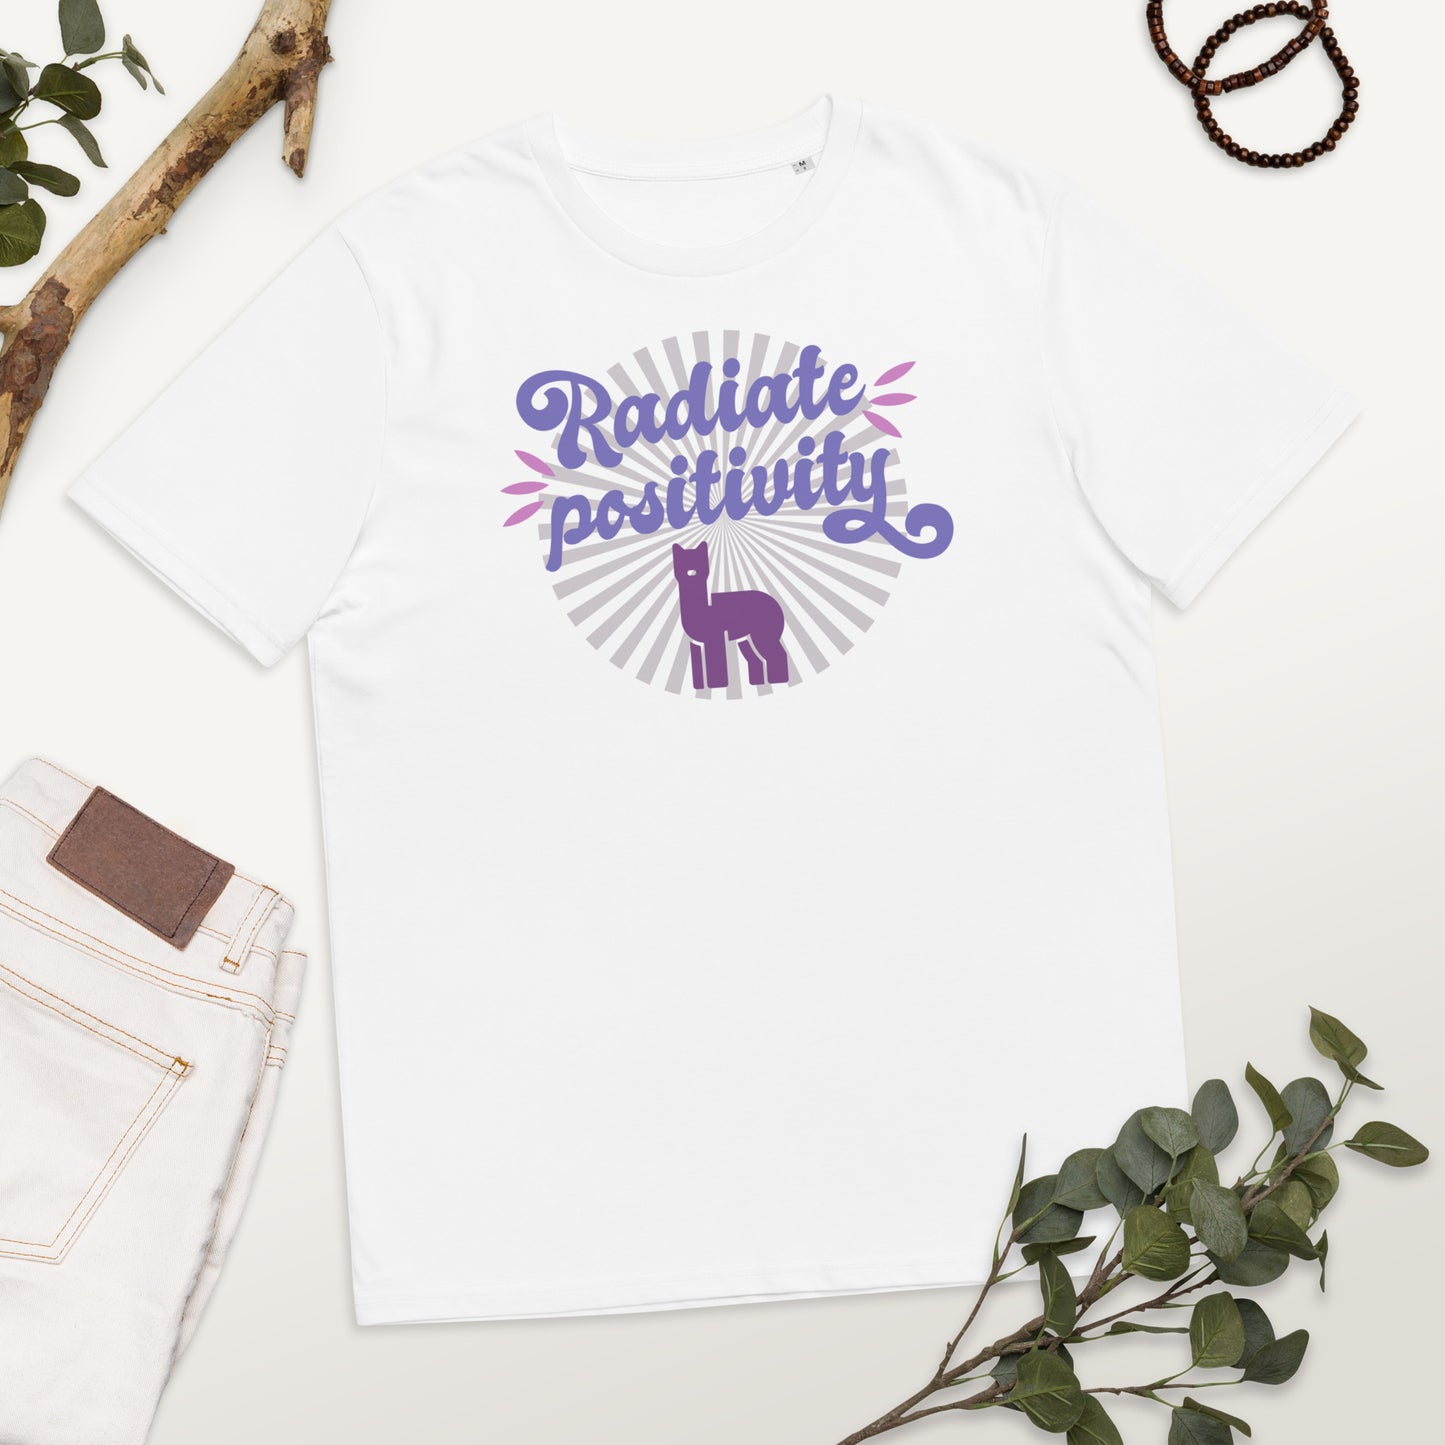 Radiate Positivity Unisex Organic Cotton T-shirt